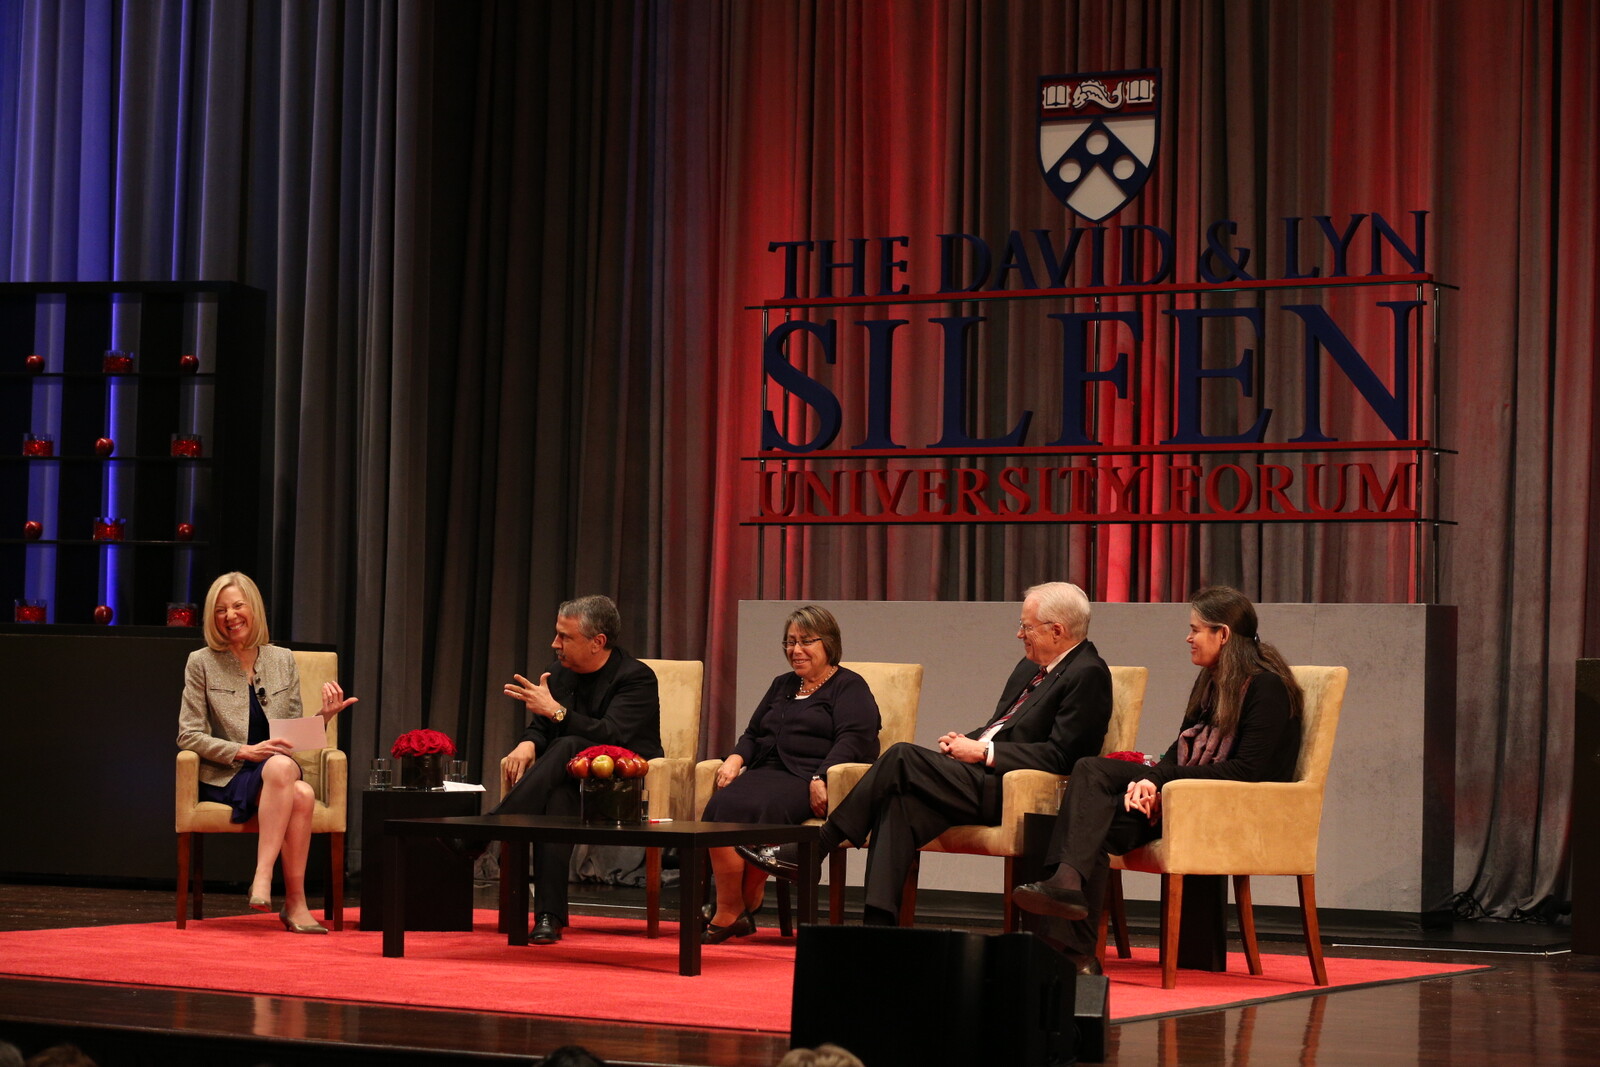 2013 five silfen forum panelists on stage